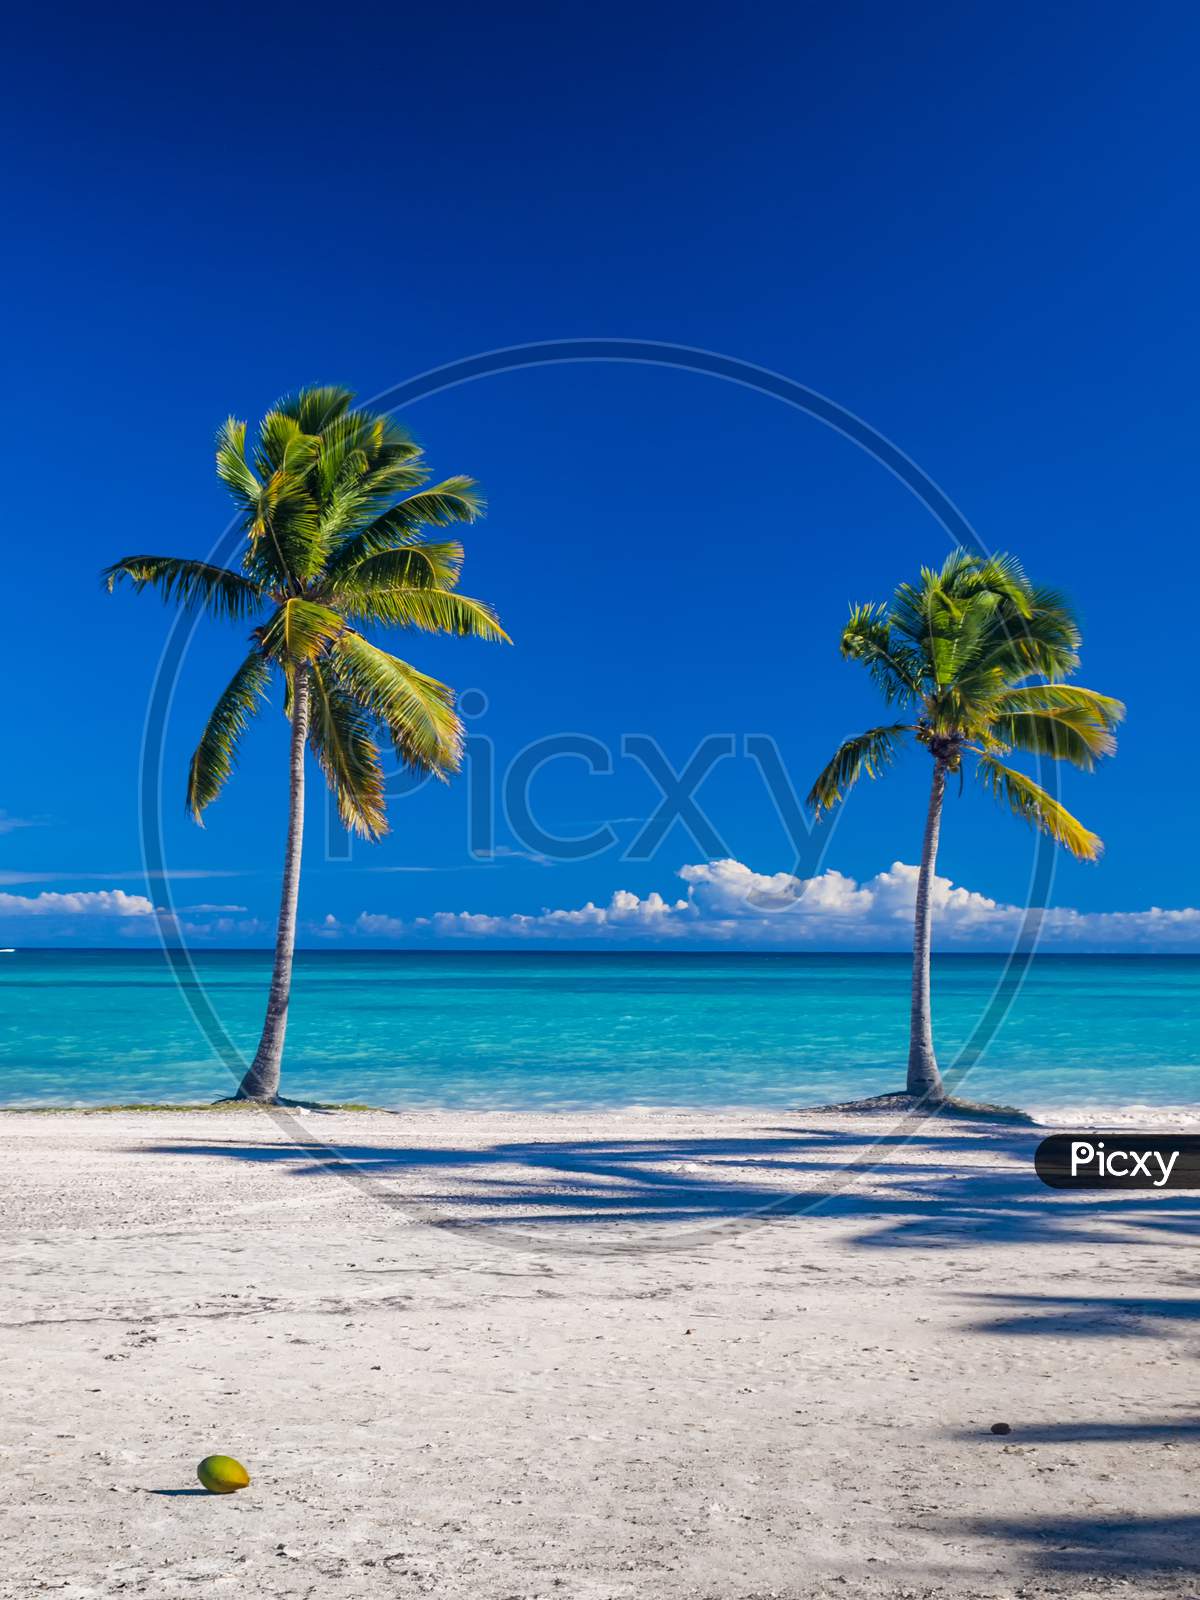 A Caribbean beach in the Dominican Republic